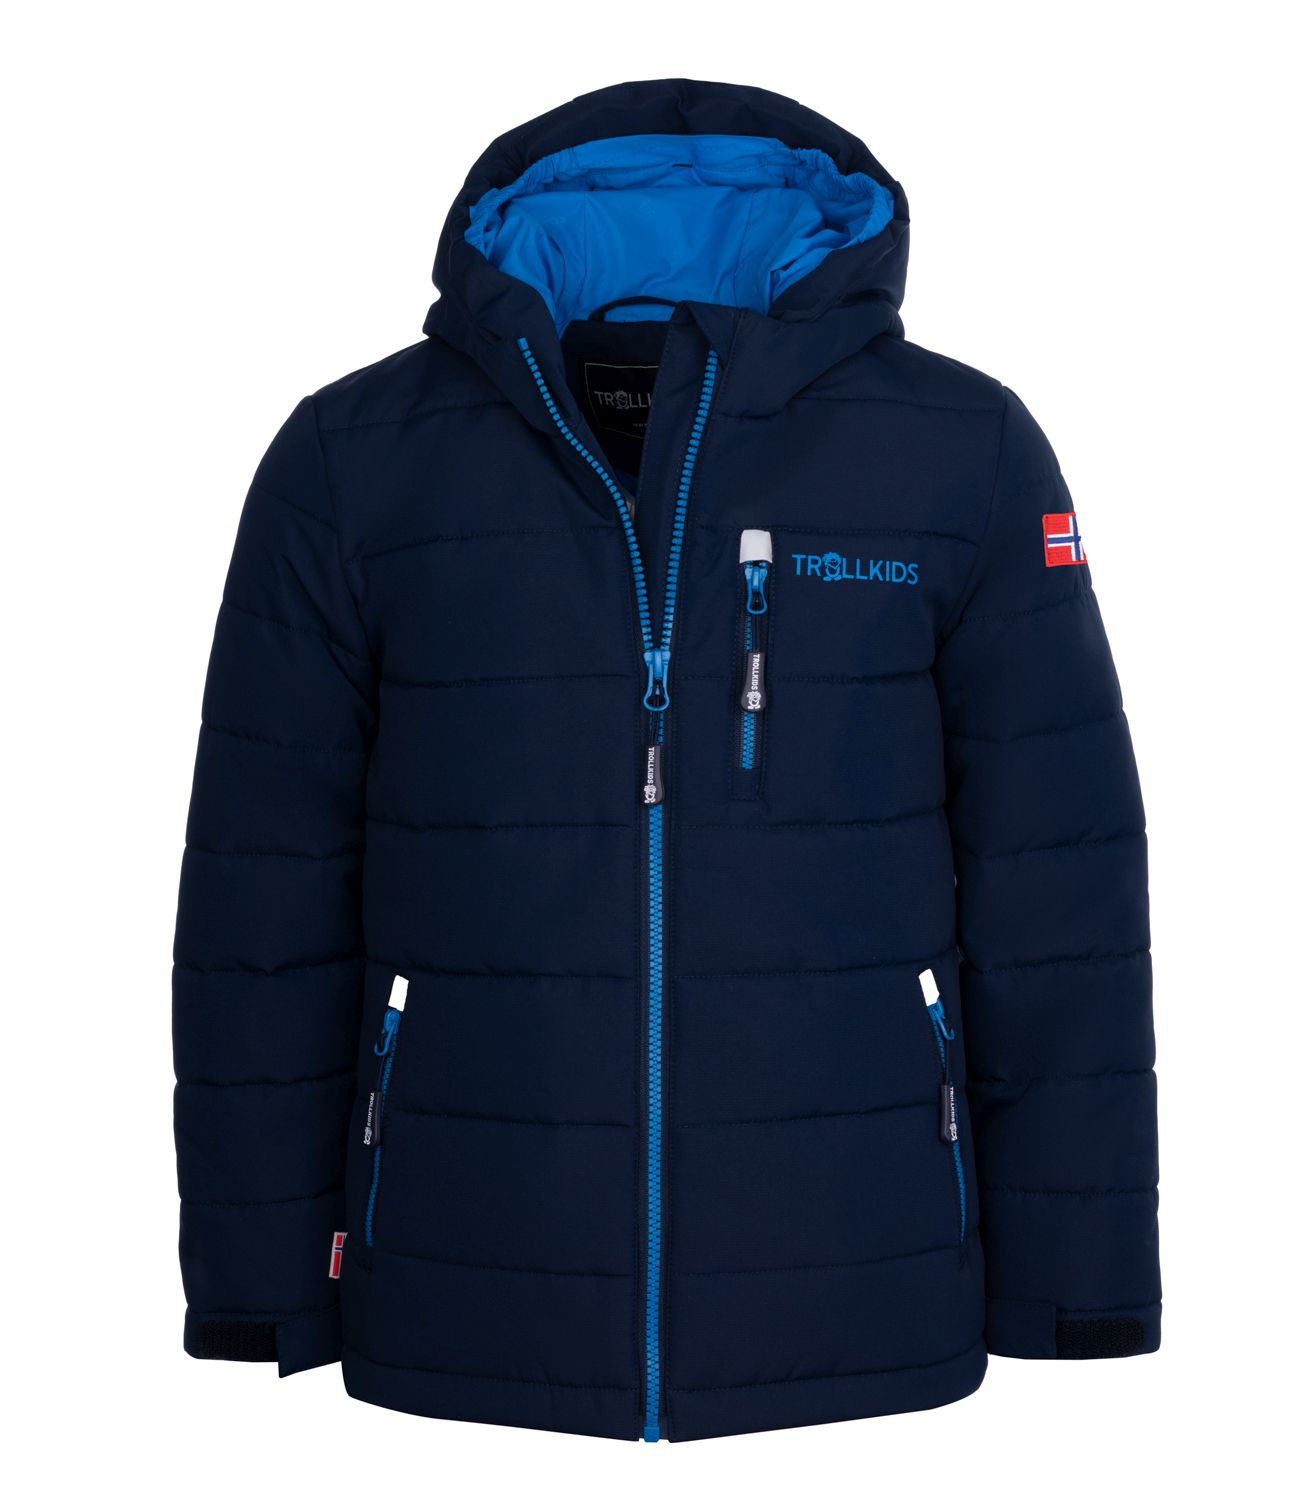 Kurtka narciarska dziecięca Trollkids Kids Jacket granatowa (513-164) XT Snow Hemsedal navy/azure wodoodporna blue